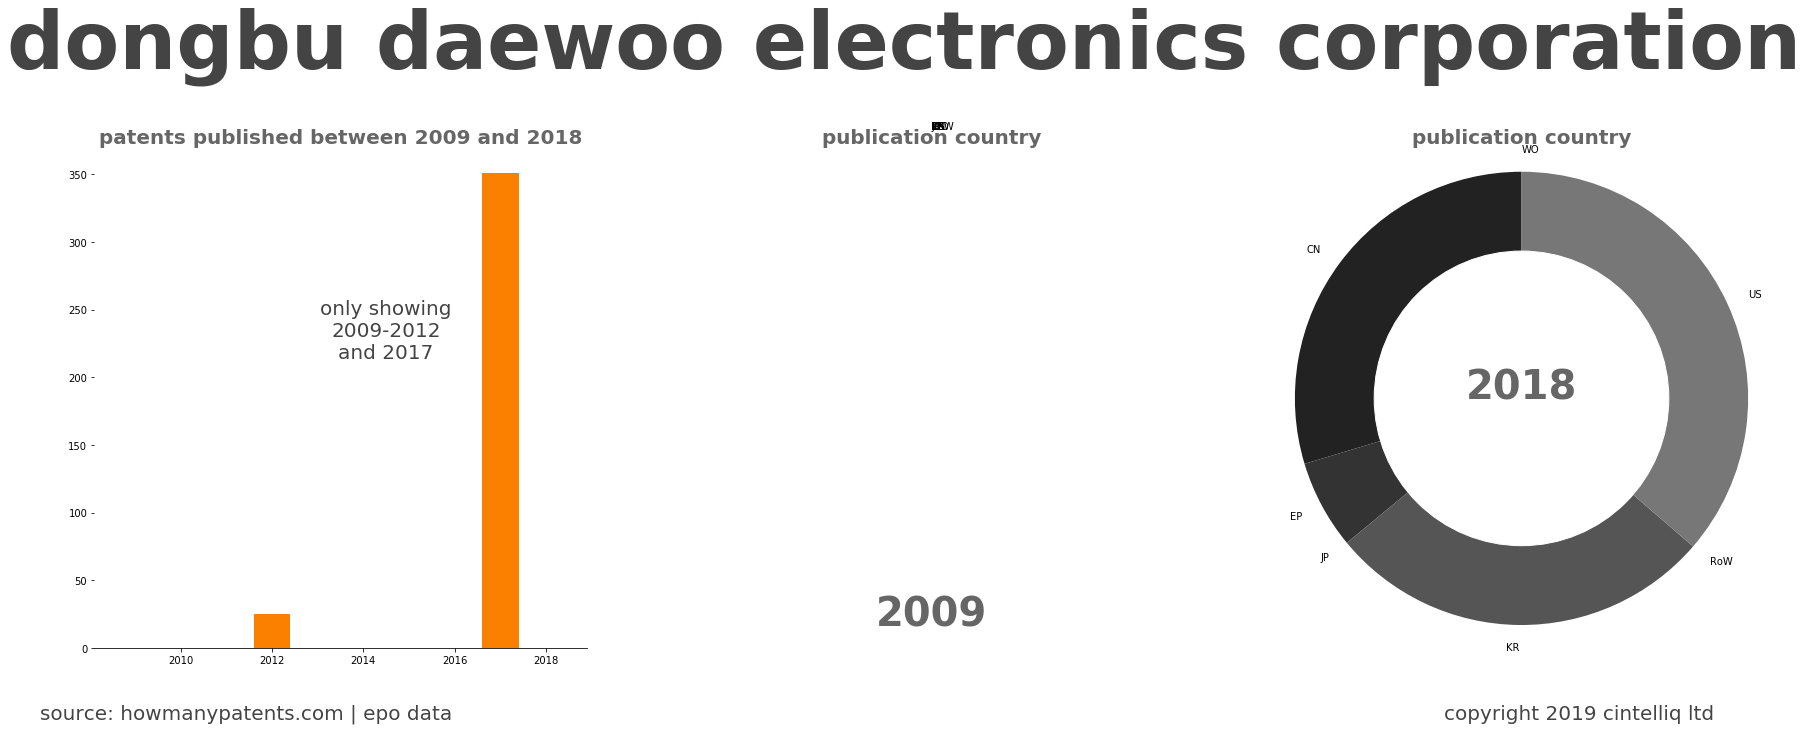 summary of patents for Dongbu Daewoo Electronics Corporation